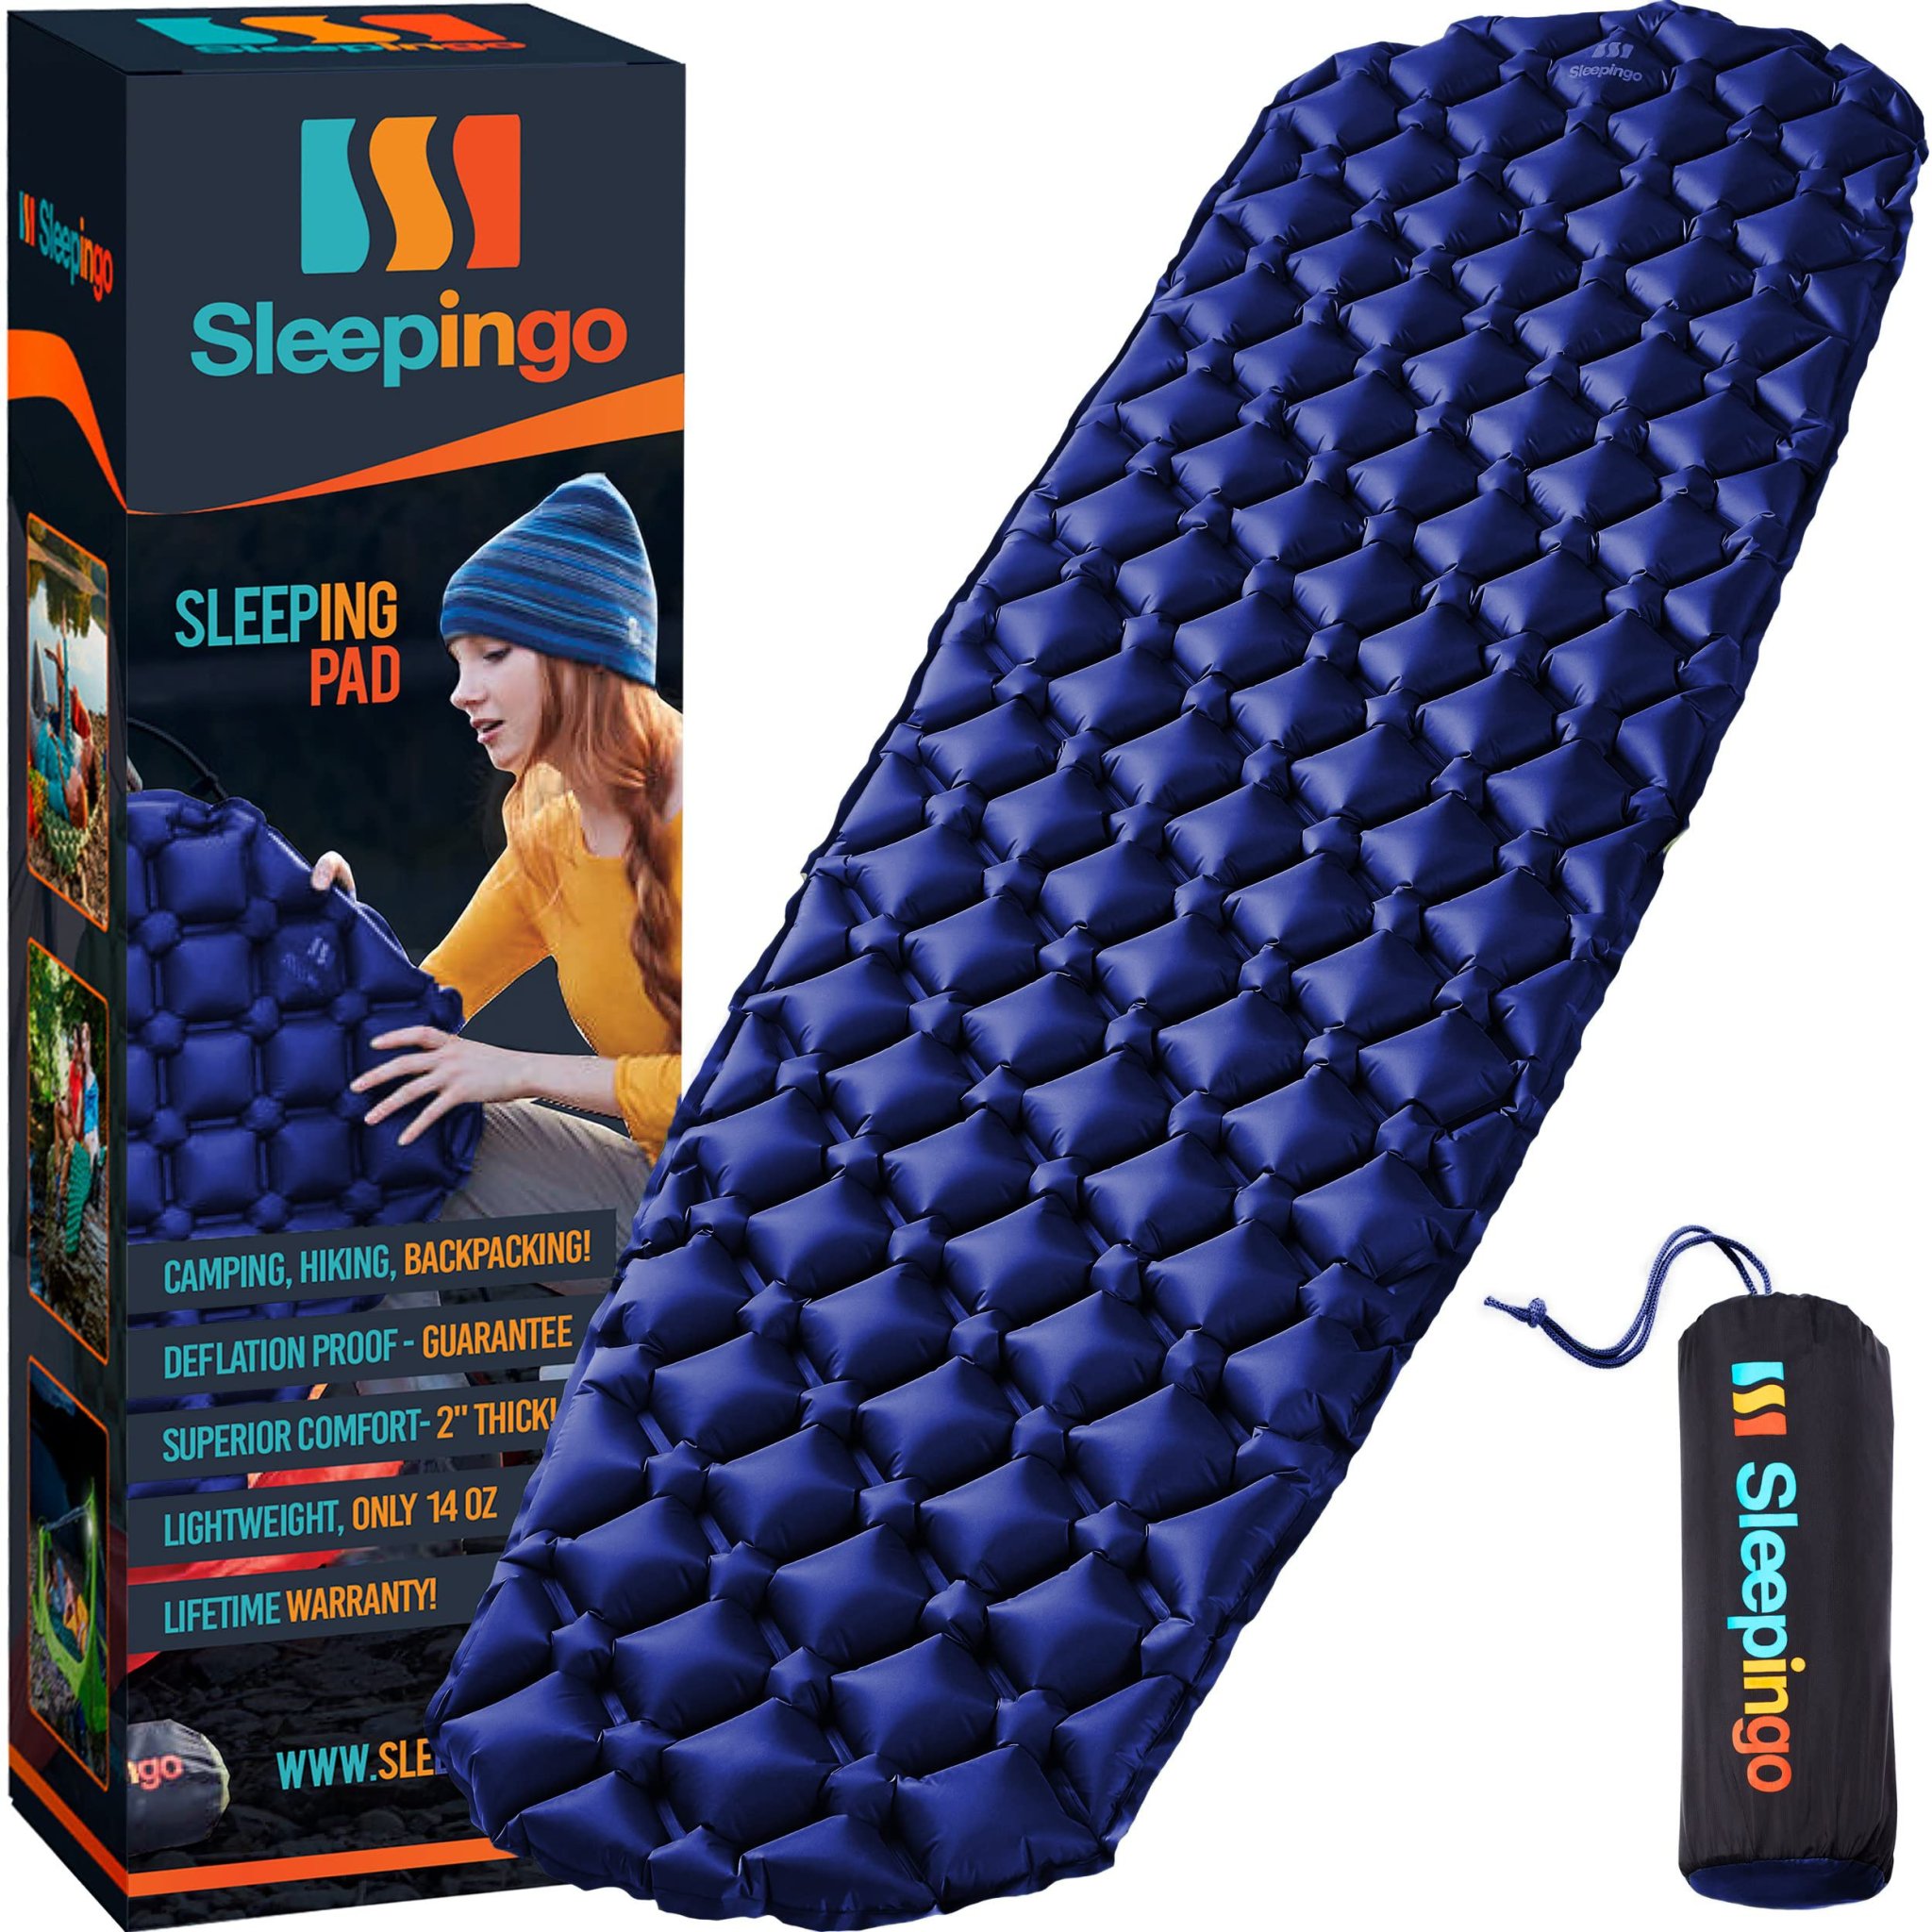 Get a better night's sleep with a sleeping pad